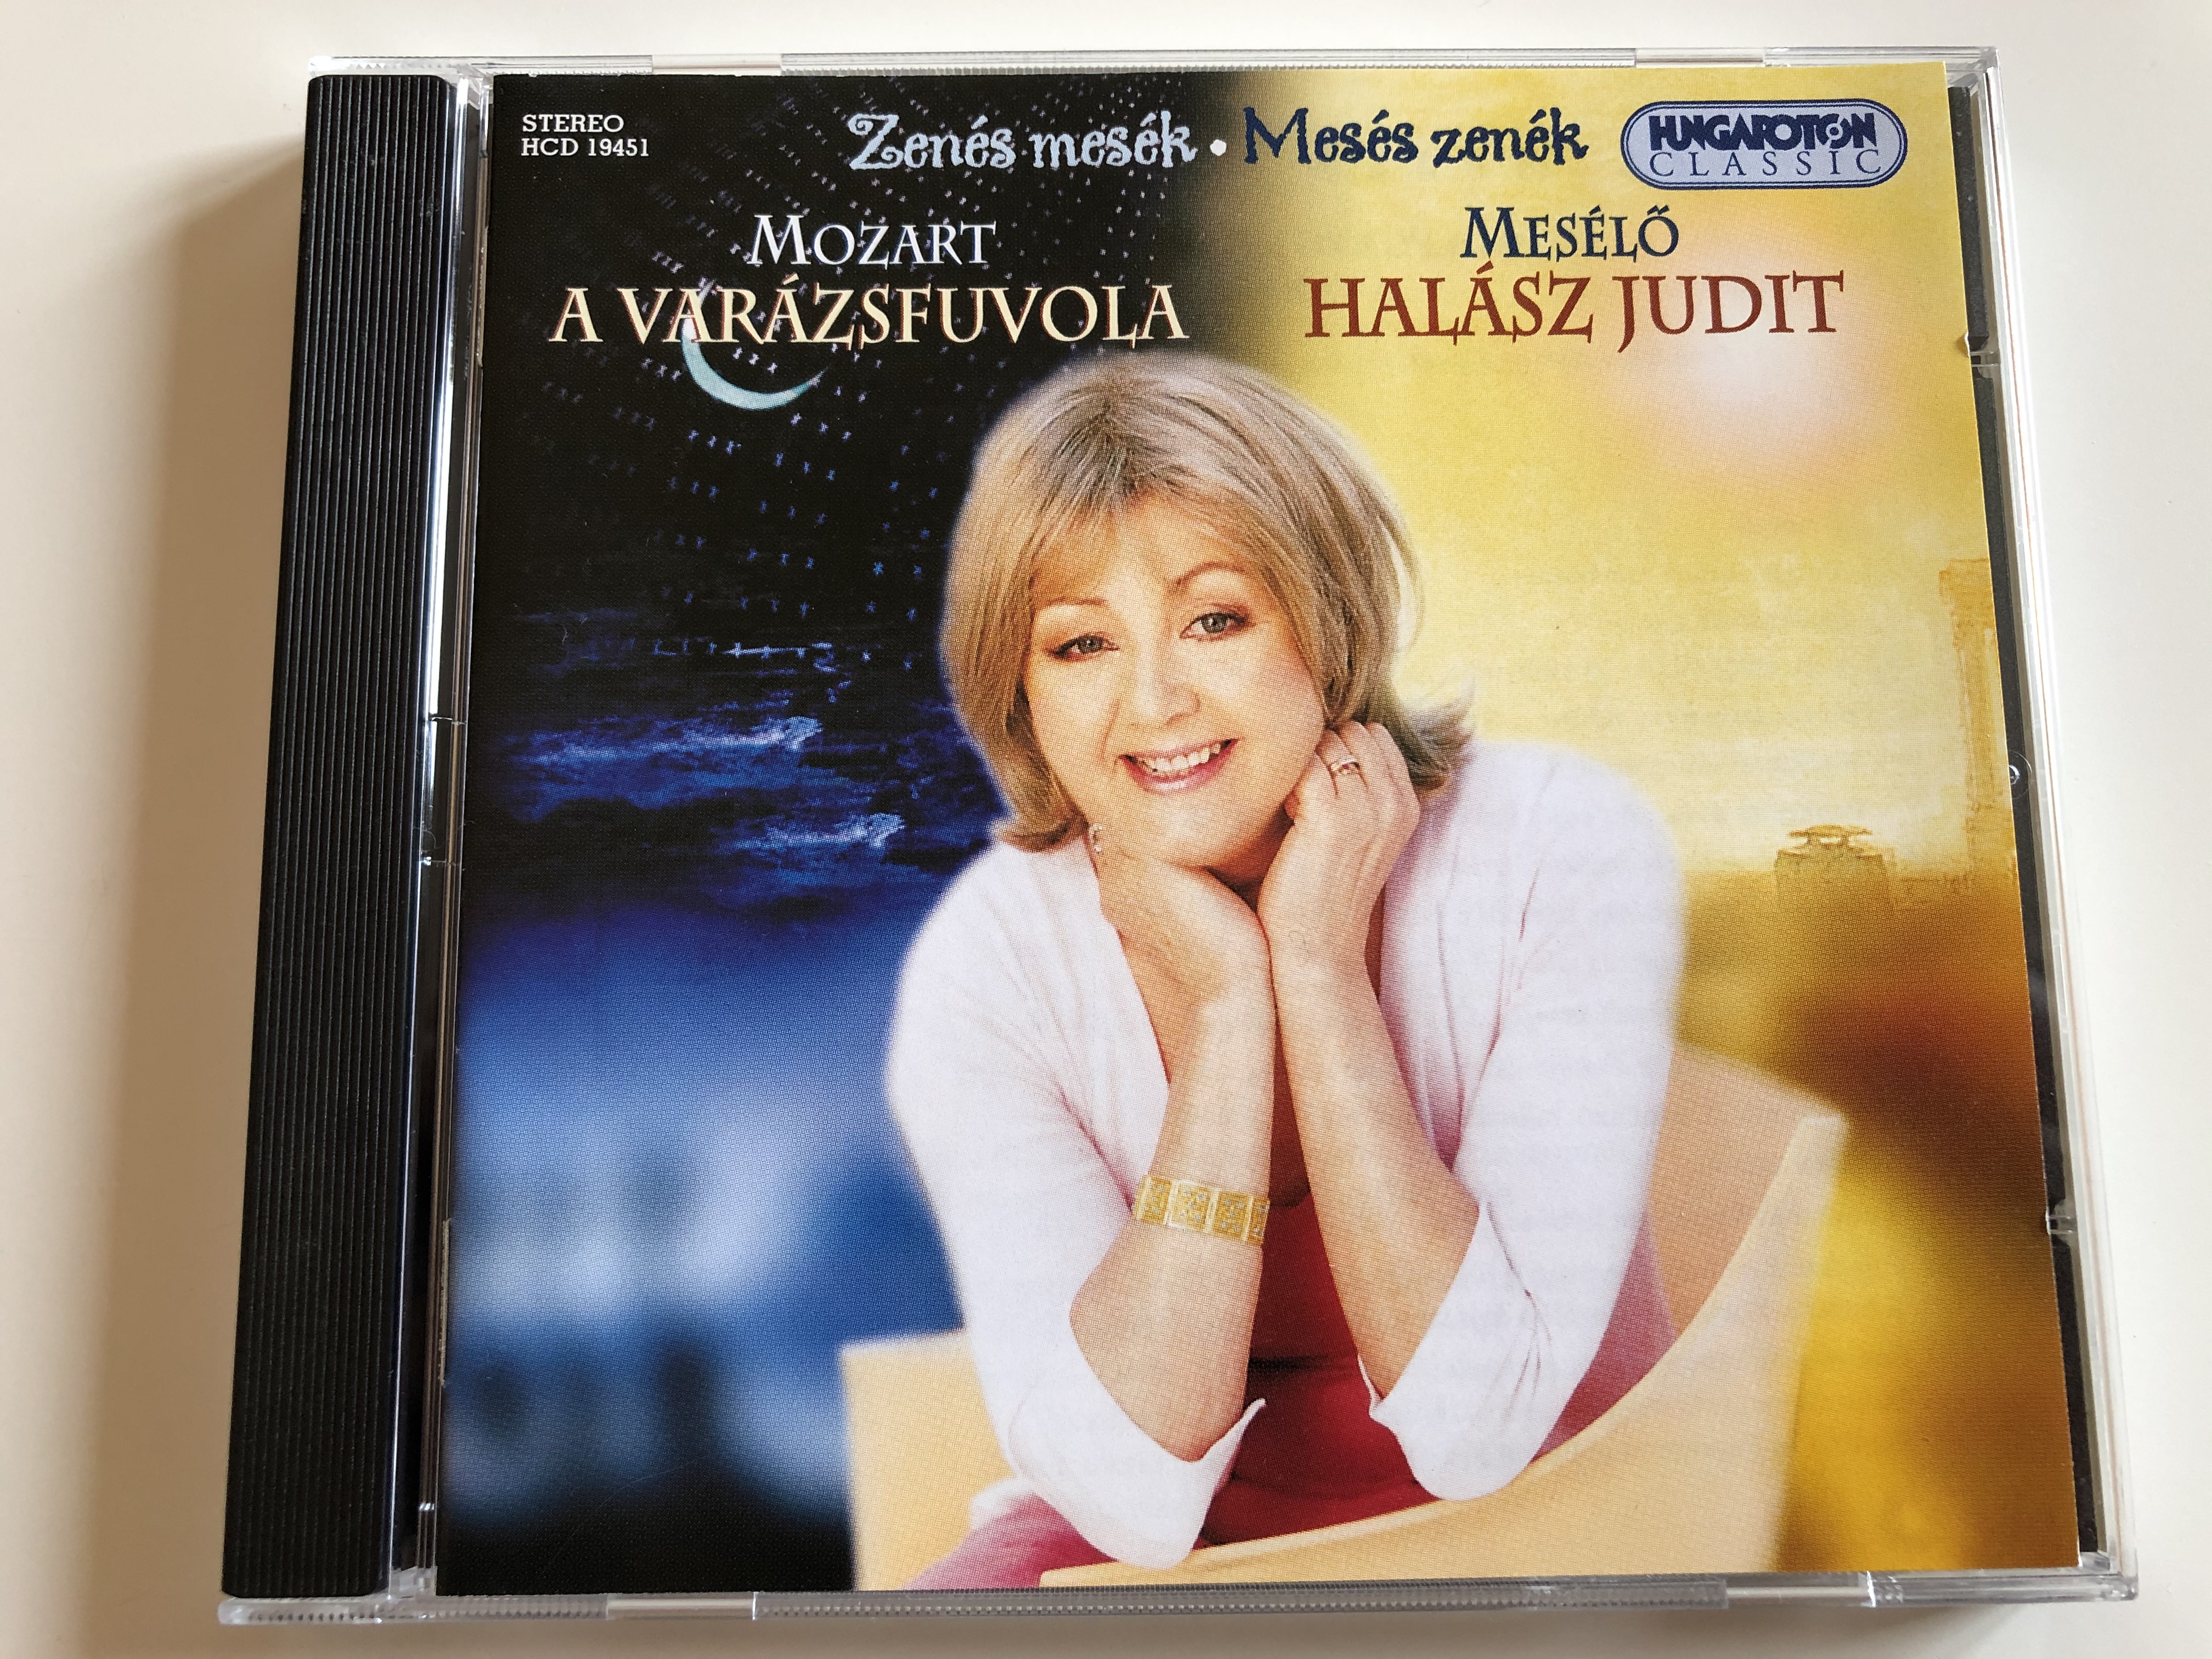 zen-s-mes-k-mes-s-zen-k-mozart-a-var-zsfuvola-meselo-hal-sz-judit-hungaroton-classic-audio-cd-2001-stereo-hcd-19451-1-.jpg